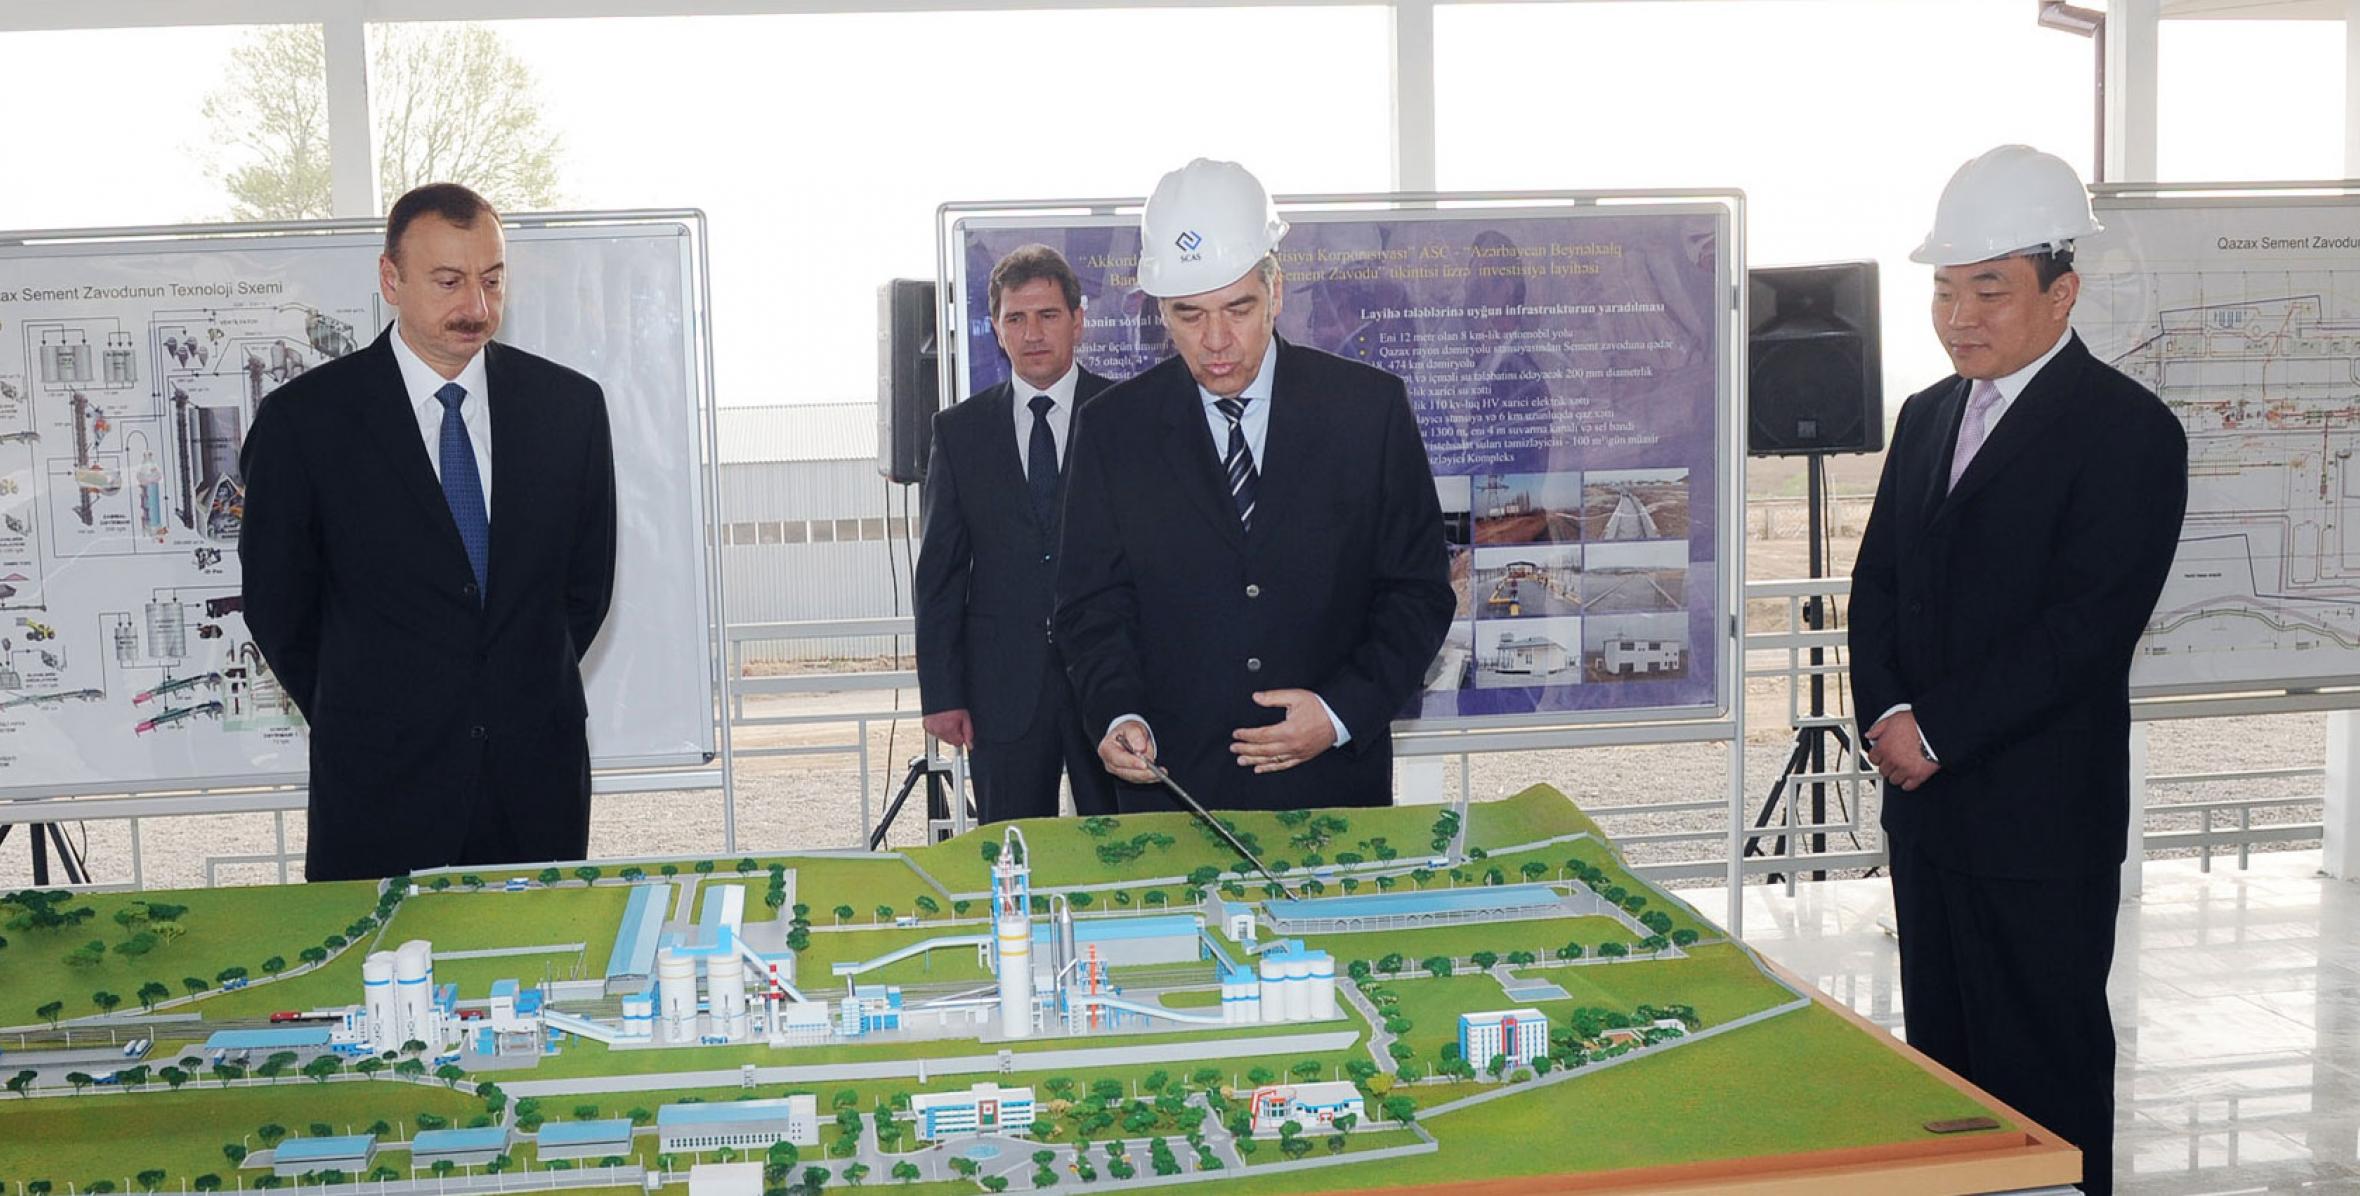 Ilham Aliyev reviewed the Gazakh cement plant under construction